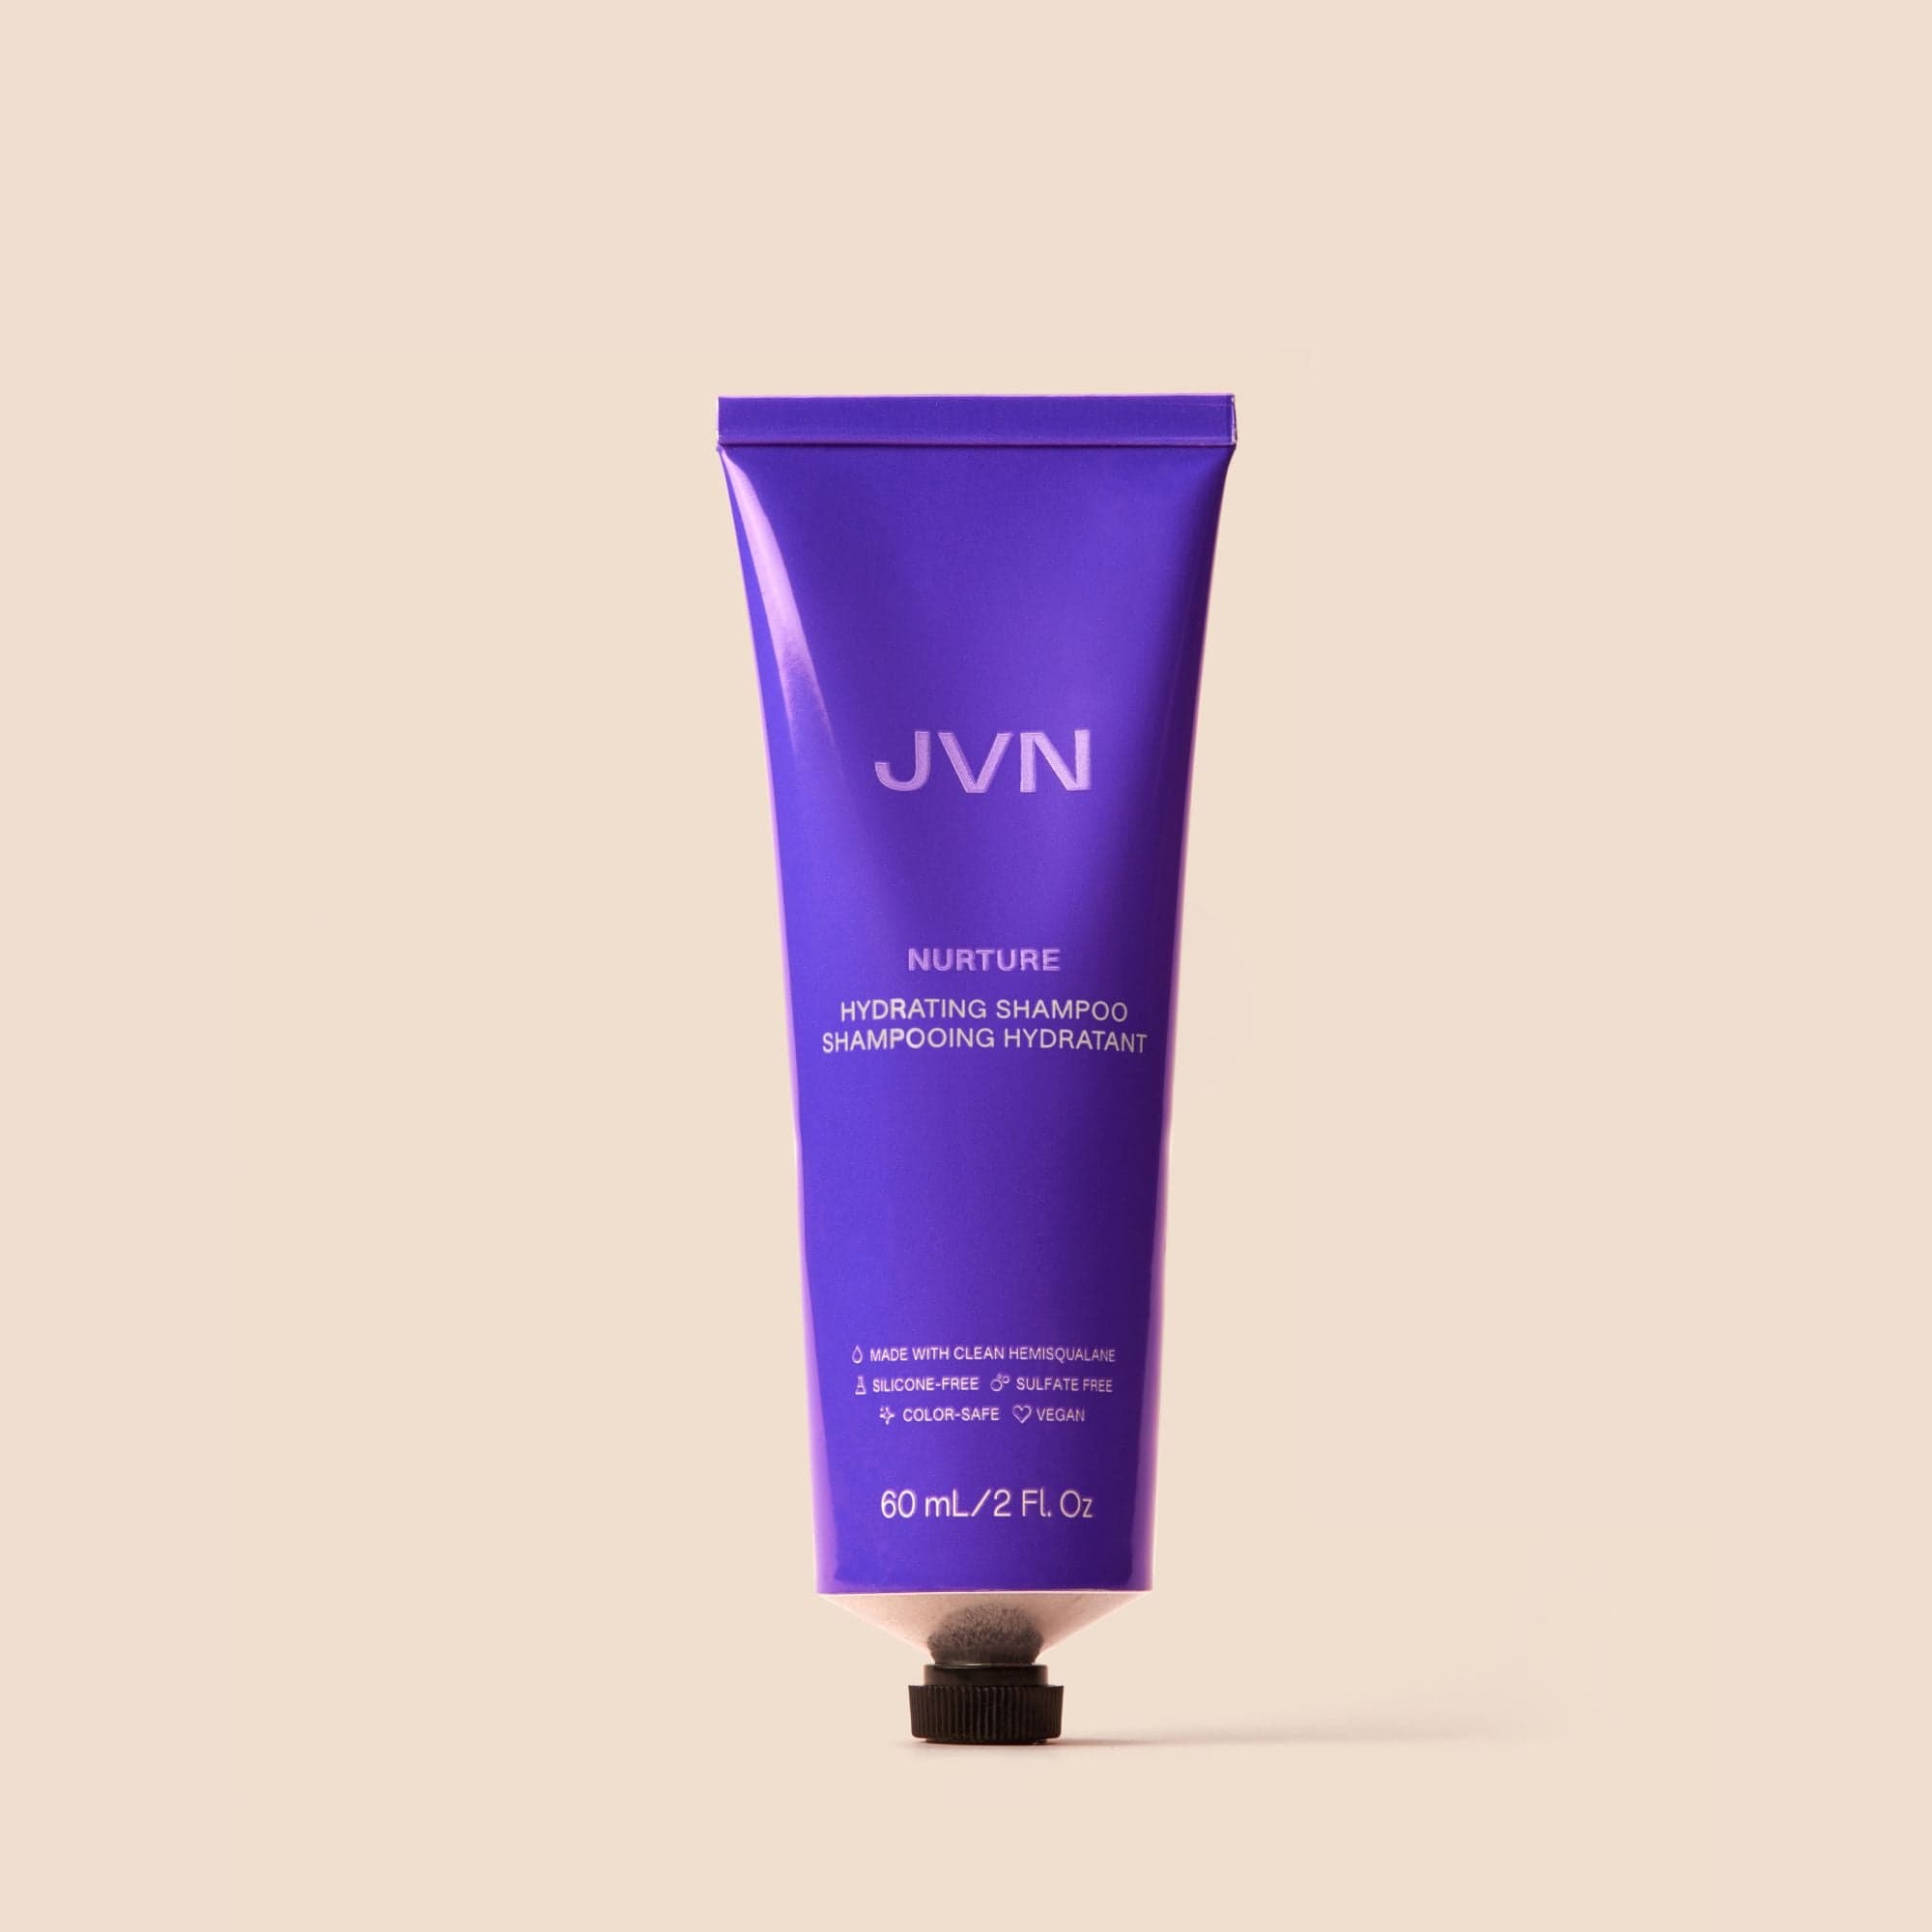 JVN Shampoo Nurture Hydrating Shampoo Travel Nurture Hydrating Shampoo Travel Size | JVN sulfate-free silicone-free sustainable